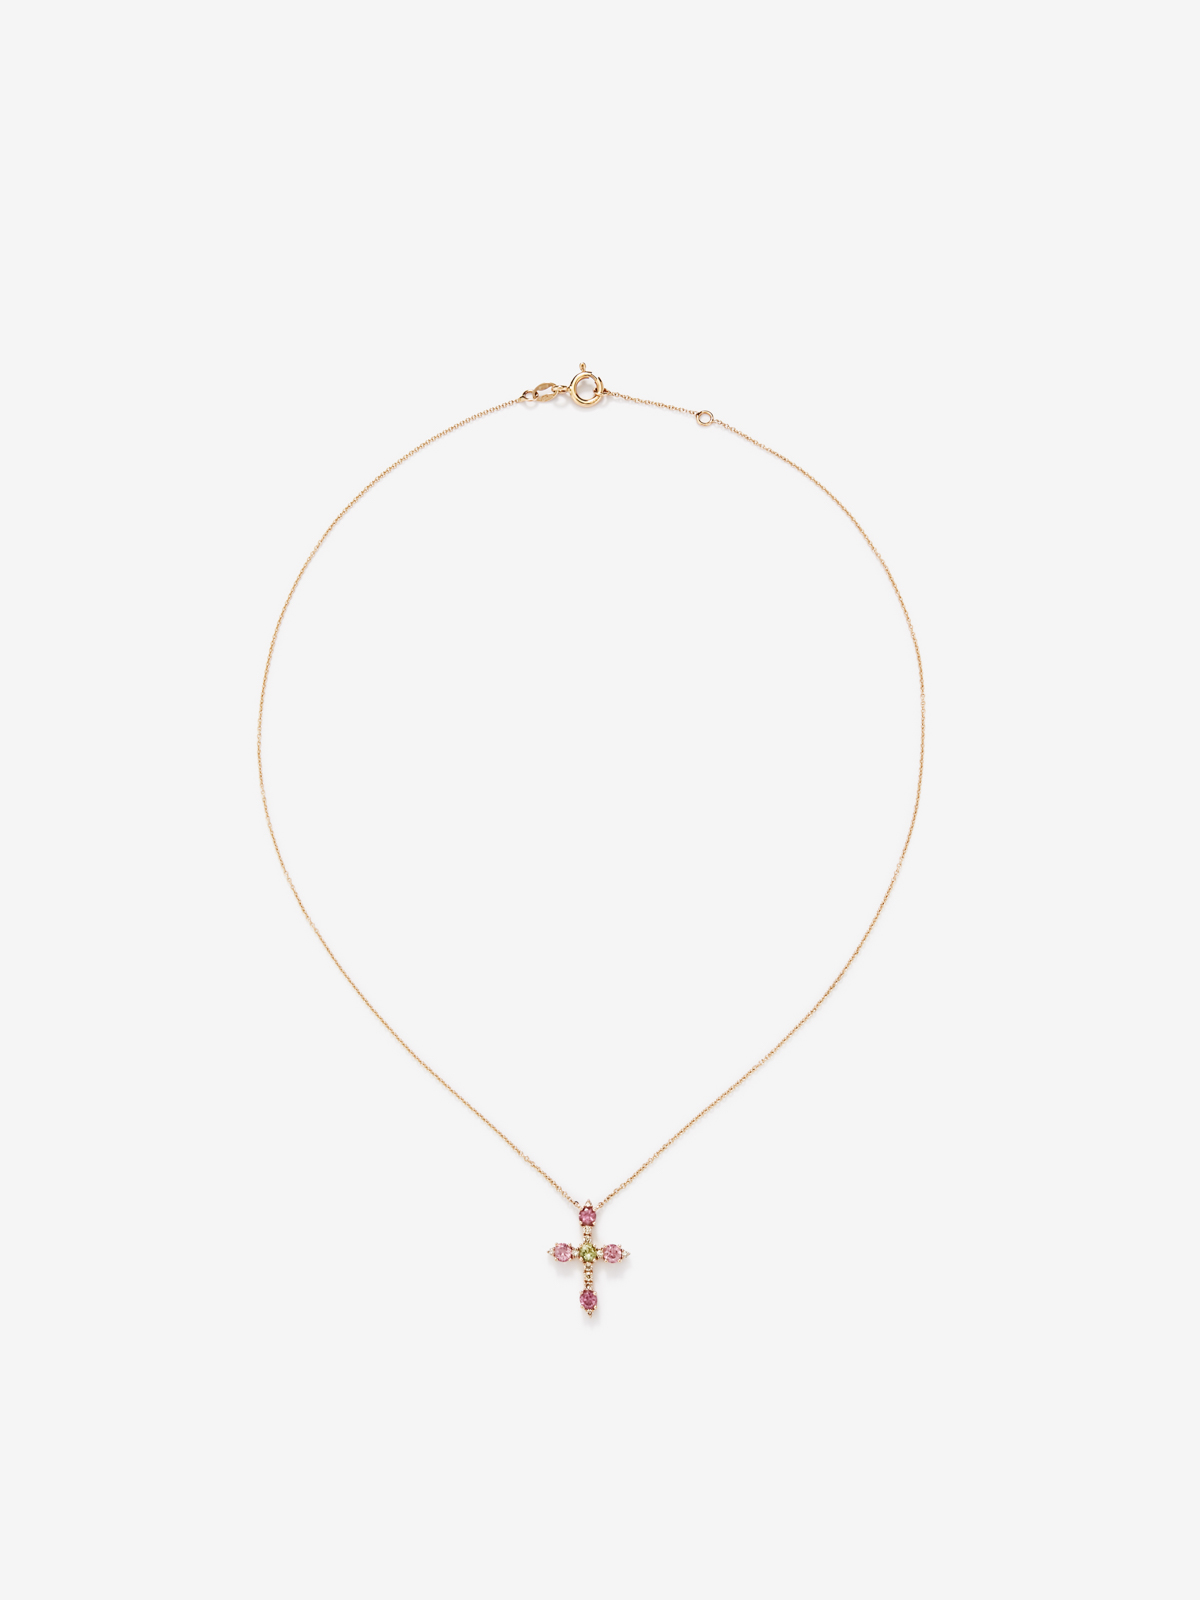 18K Rose Gold Cross Pendant Chain with Tourmaline and Diamond